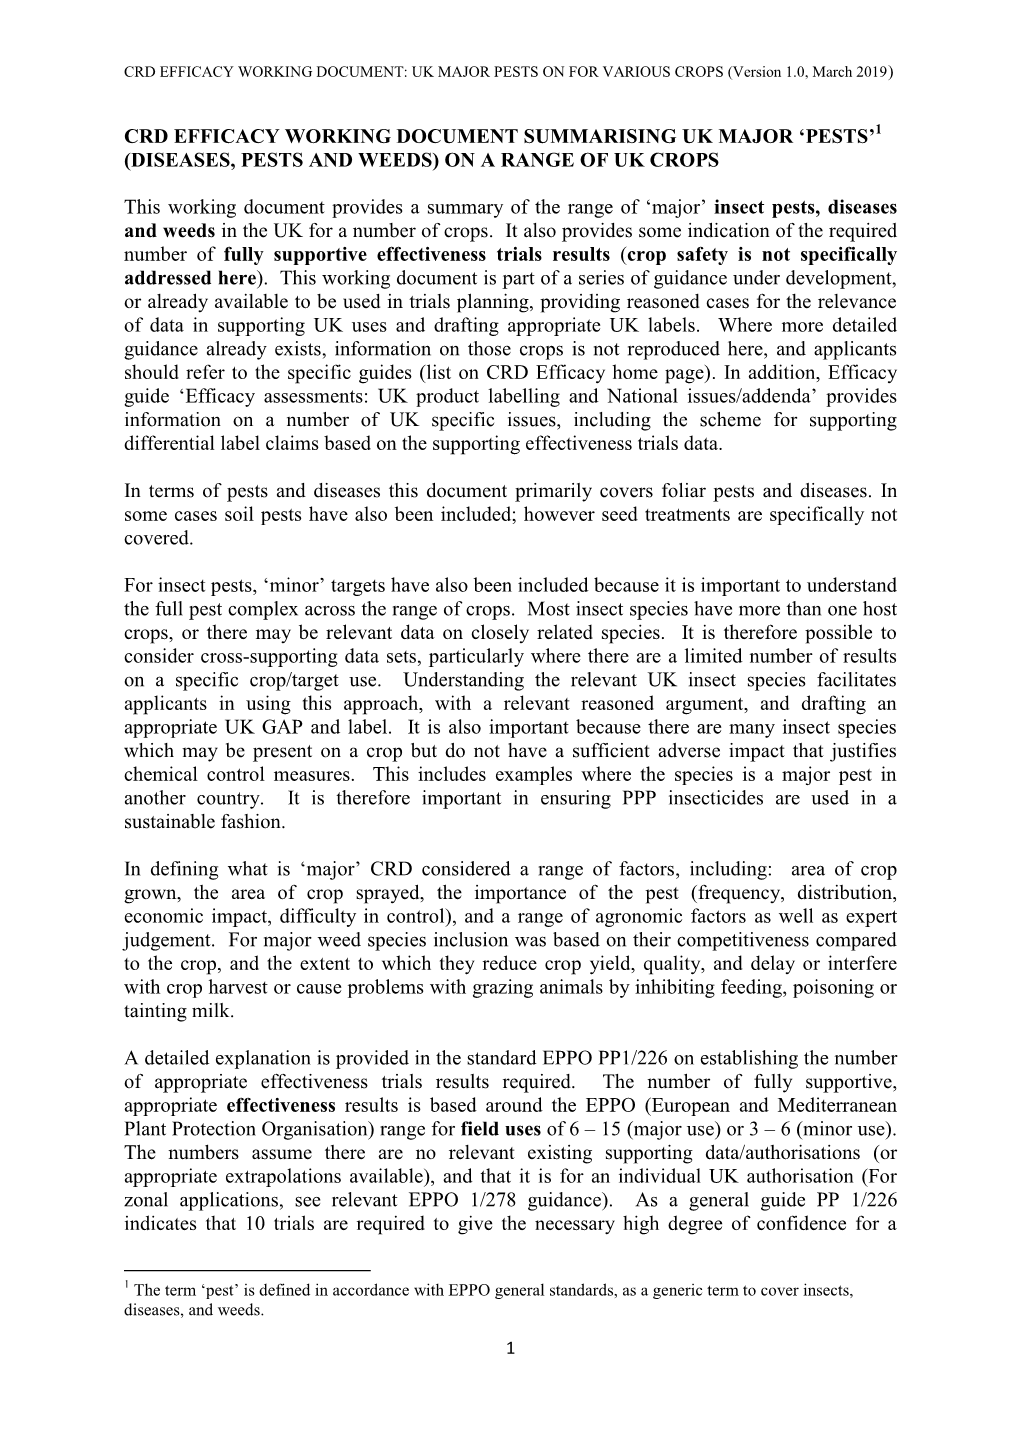 Crd Efficacy Working Document Summarising Uk Major 'Pests'